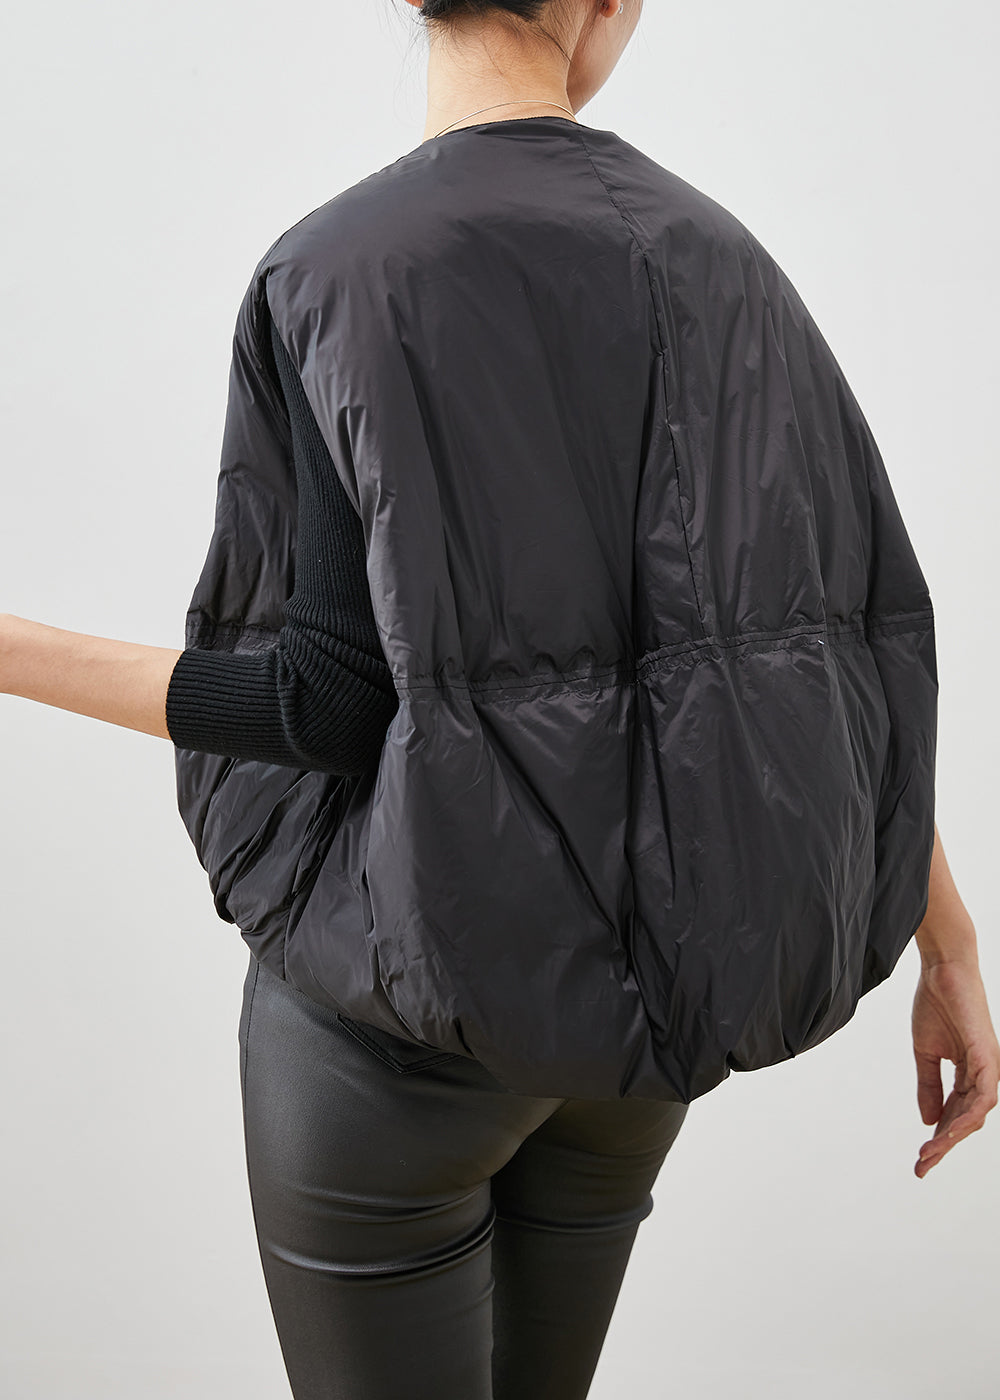 Style Black O-Neck Oversized Fine Cotton Filled Vests Winter